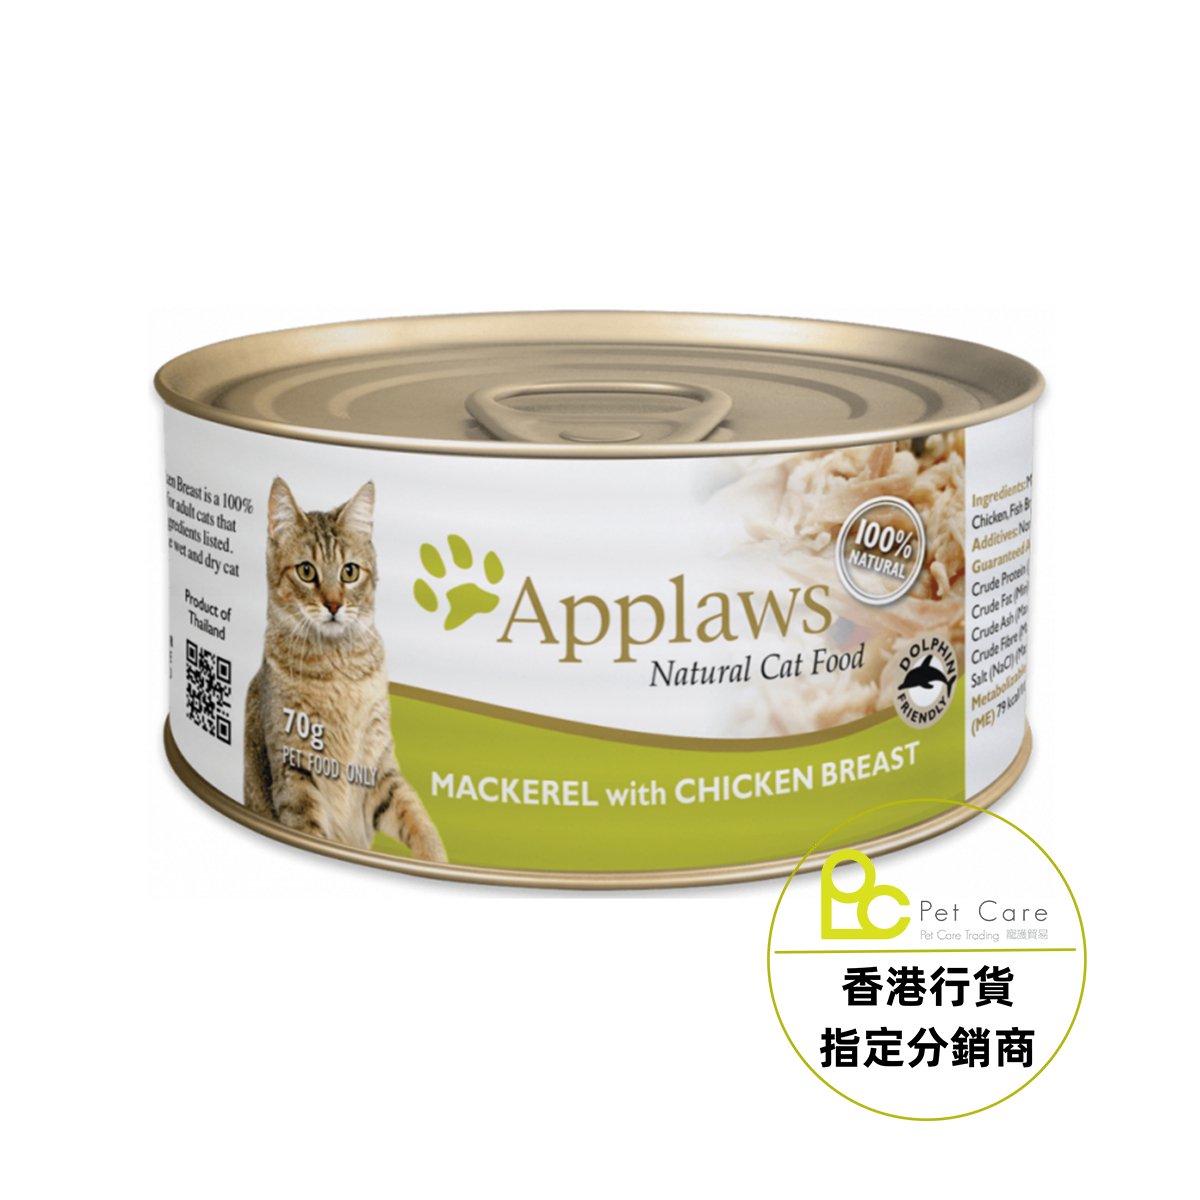 Applaws 全天然 貓罐頭 - 雞胸 + 鯖魚 70g (細)